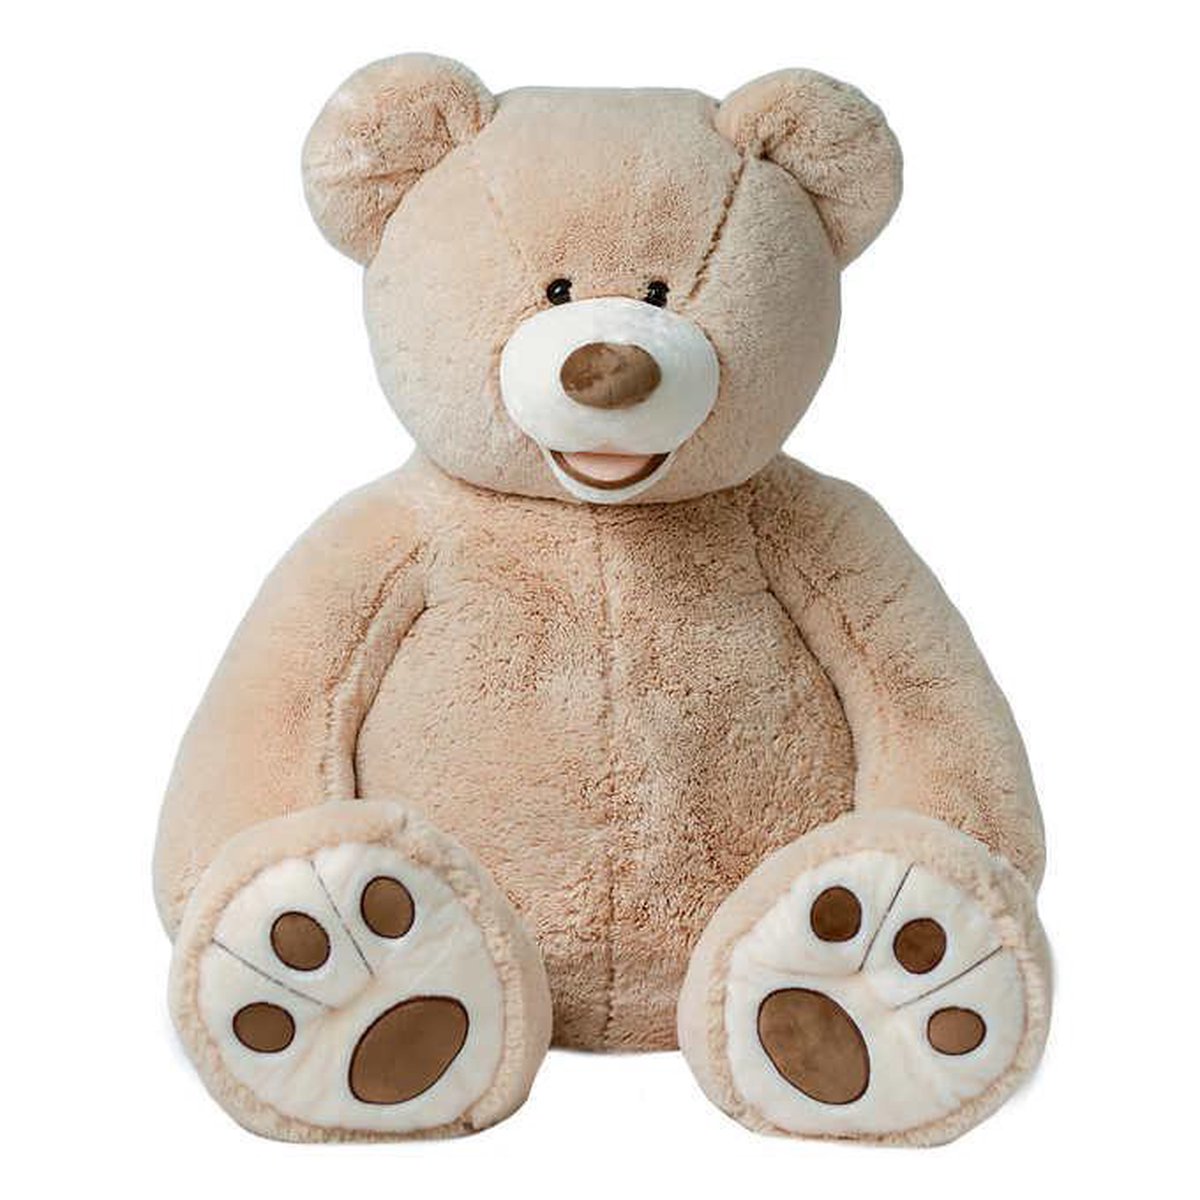 Reductor vredig leven Mega grote reuze teddy knuffel beer 150 cm lichtbruin | bol.com